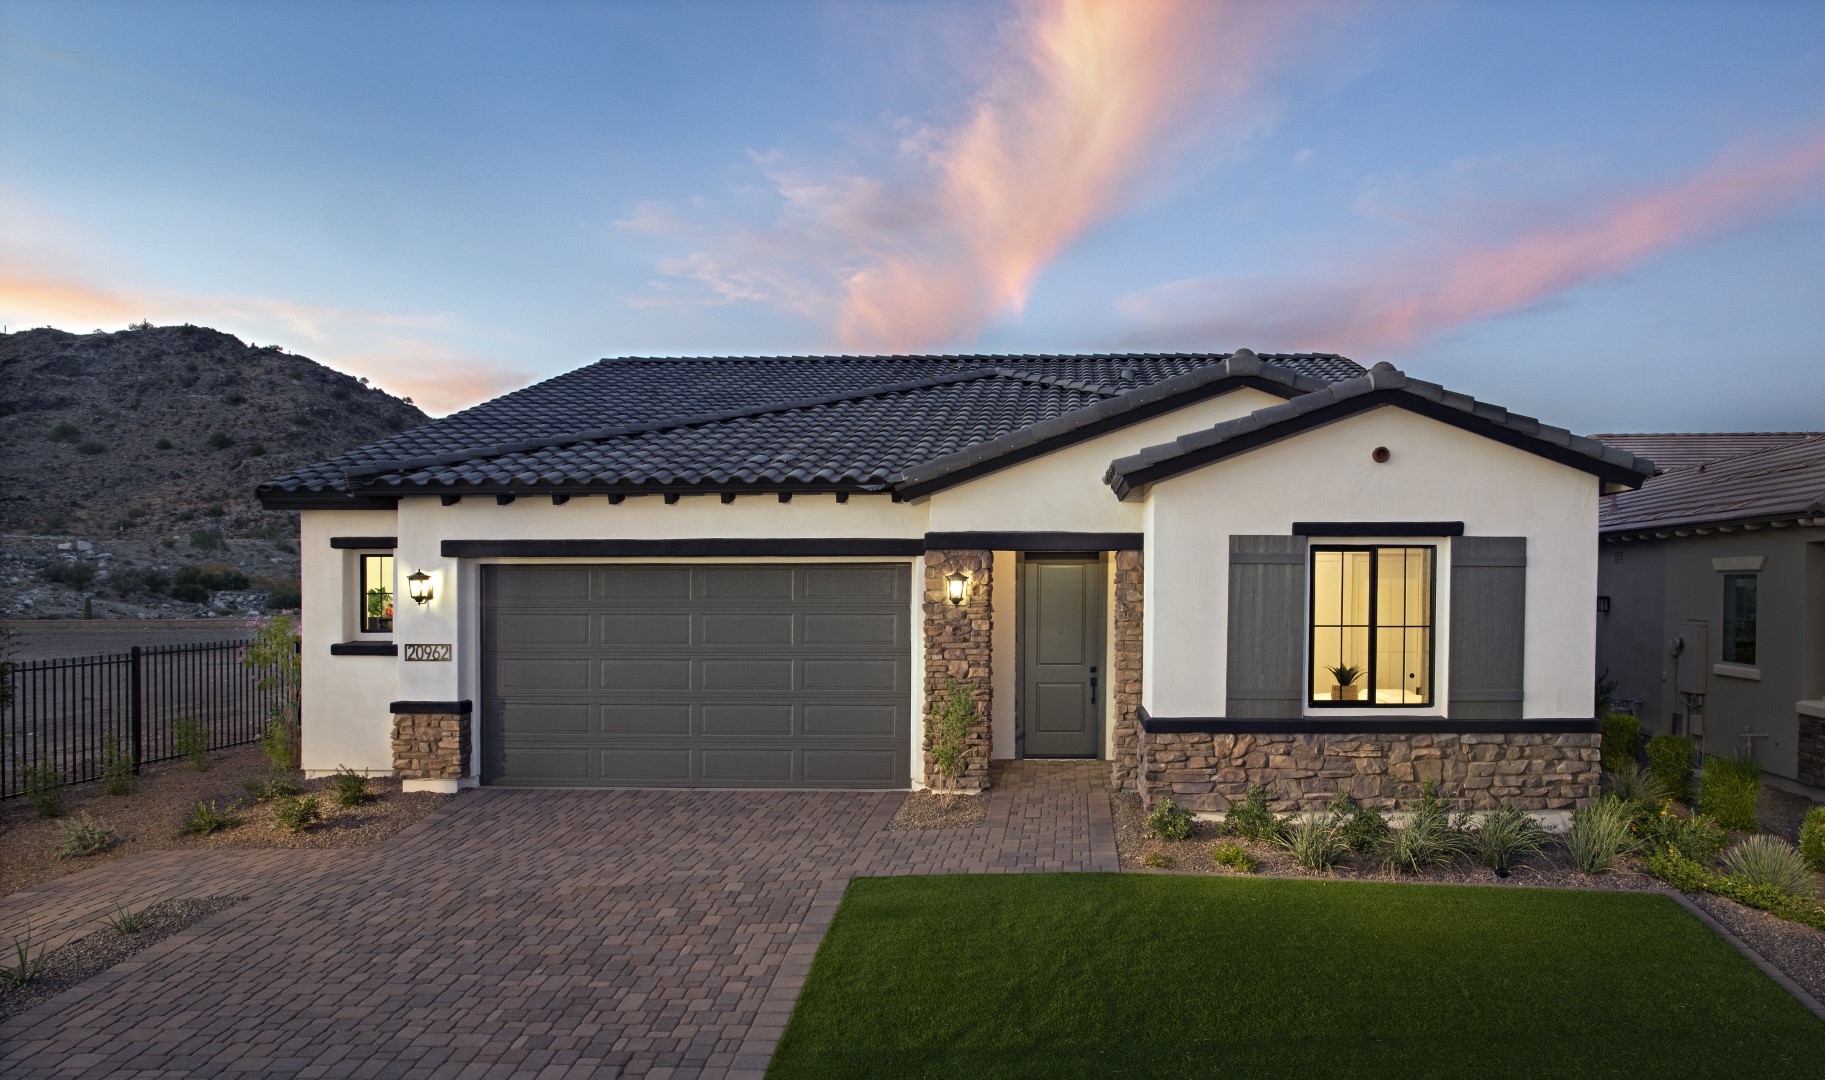 New Homes near Phoenix AZ | K Hovnanian Victory at Verrado | 55+ Living